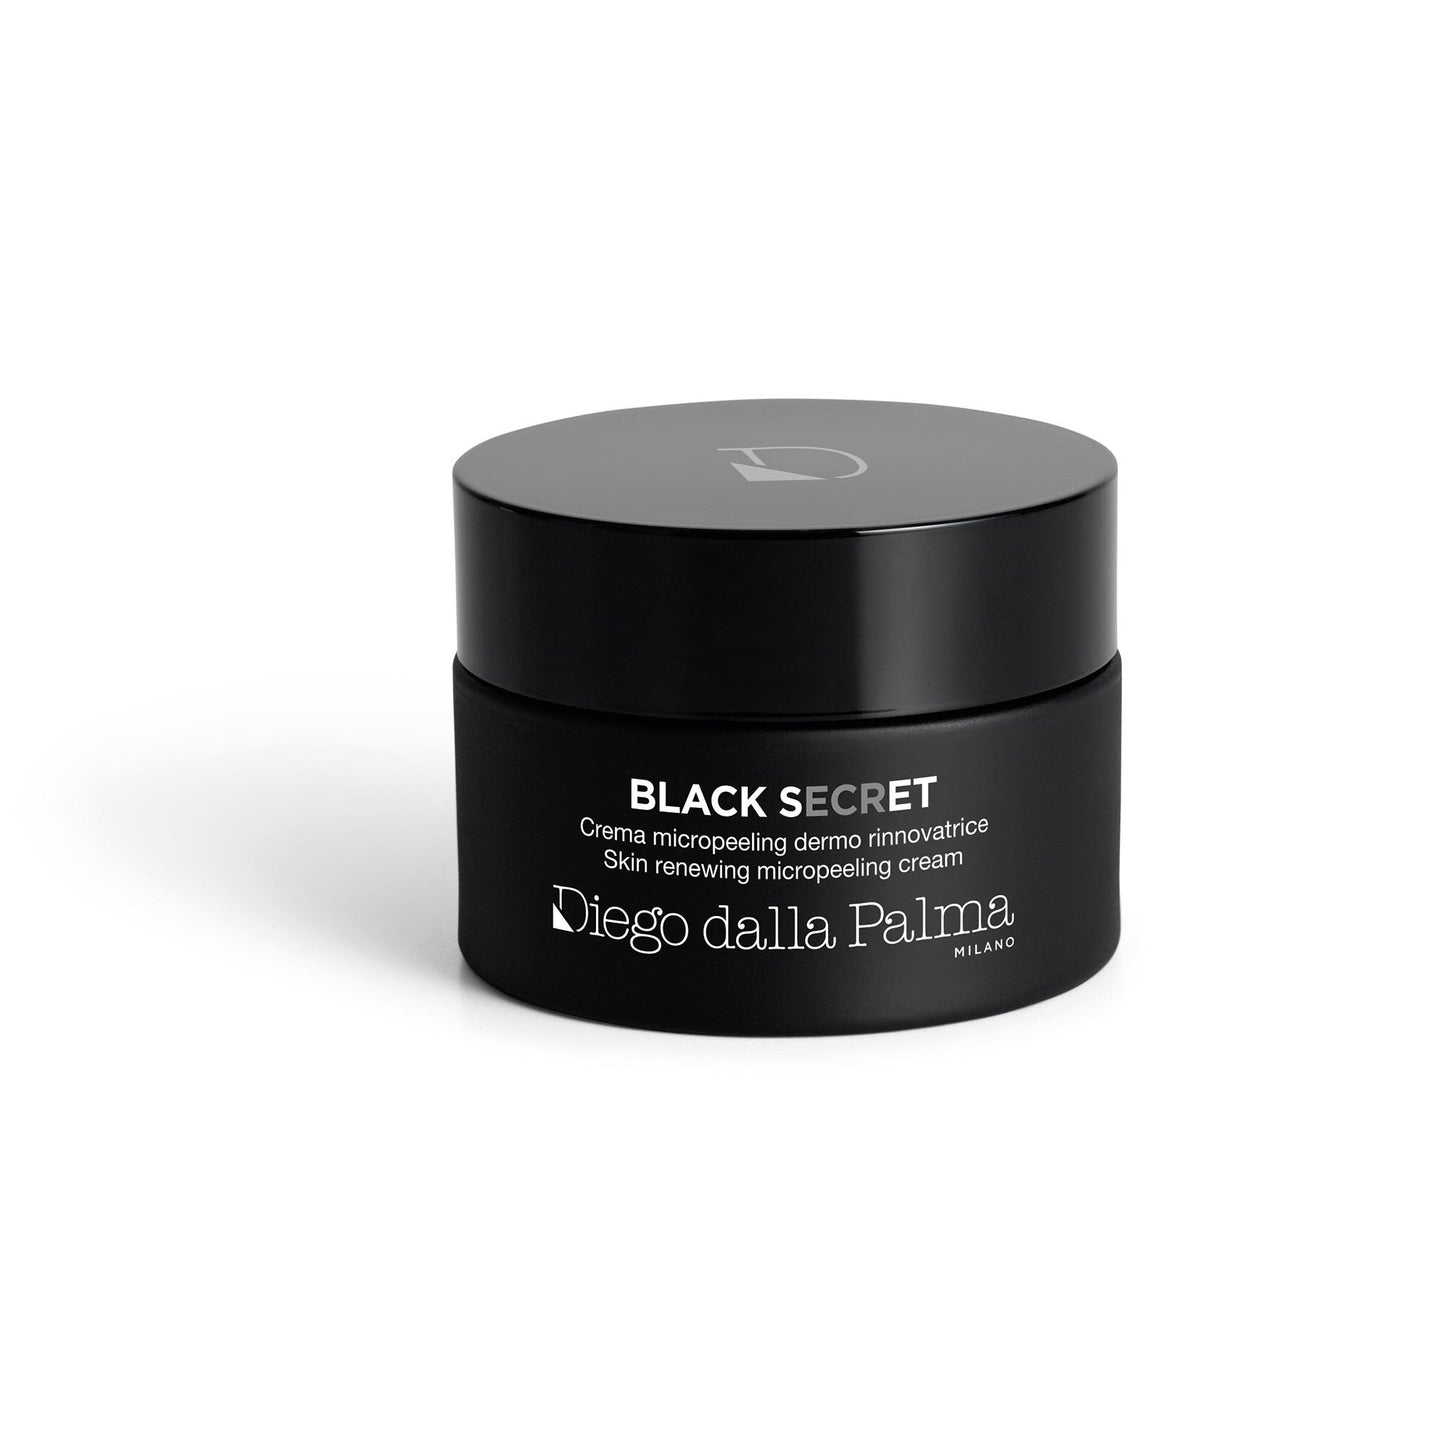 Black Secret Crema Micro Peeling Dermo Rinnovatrice